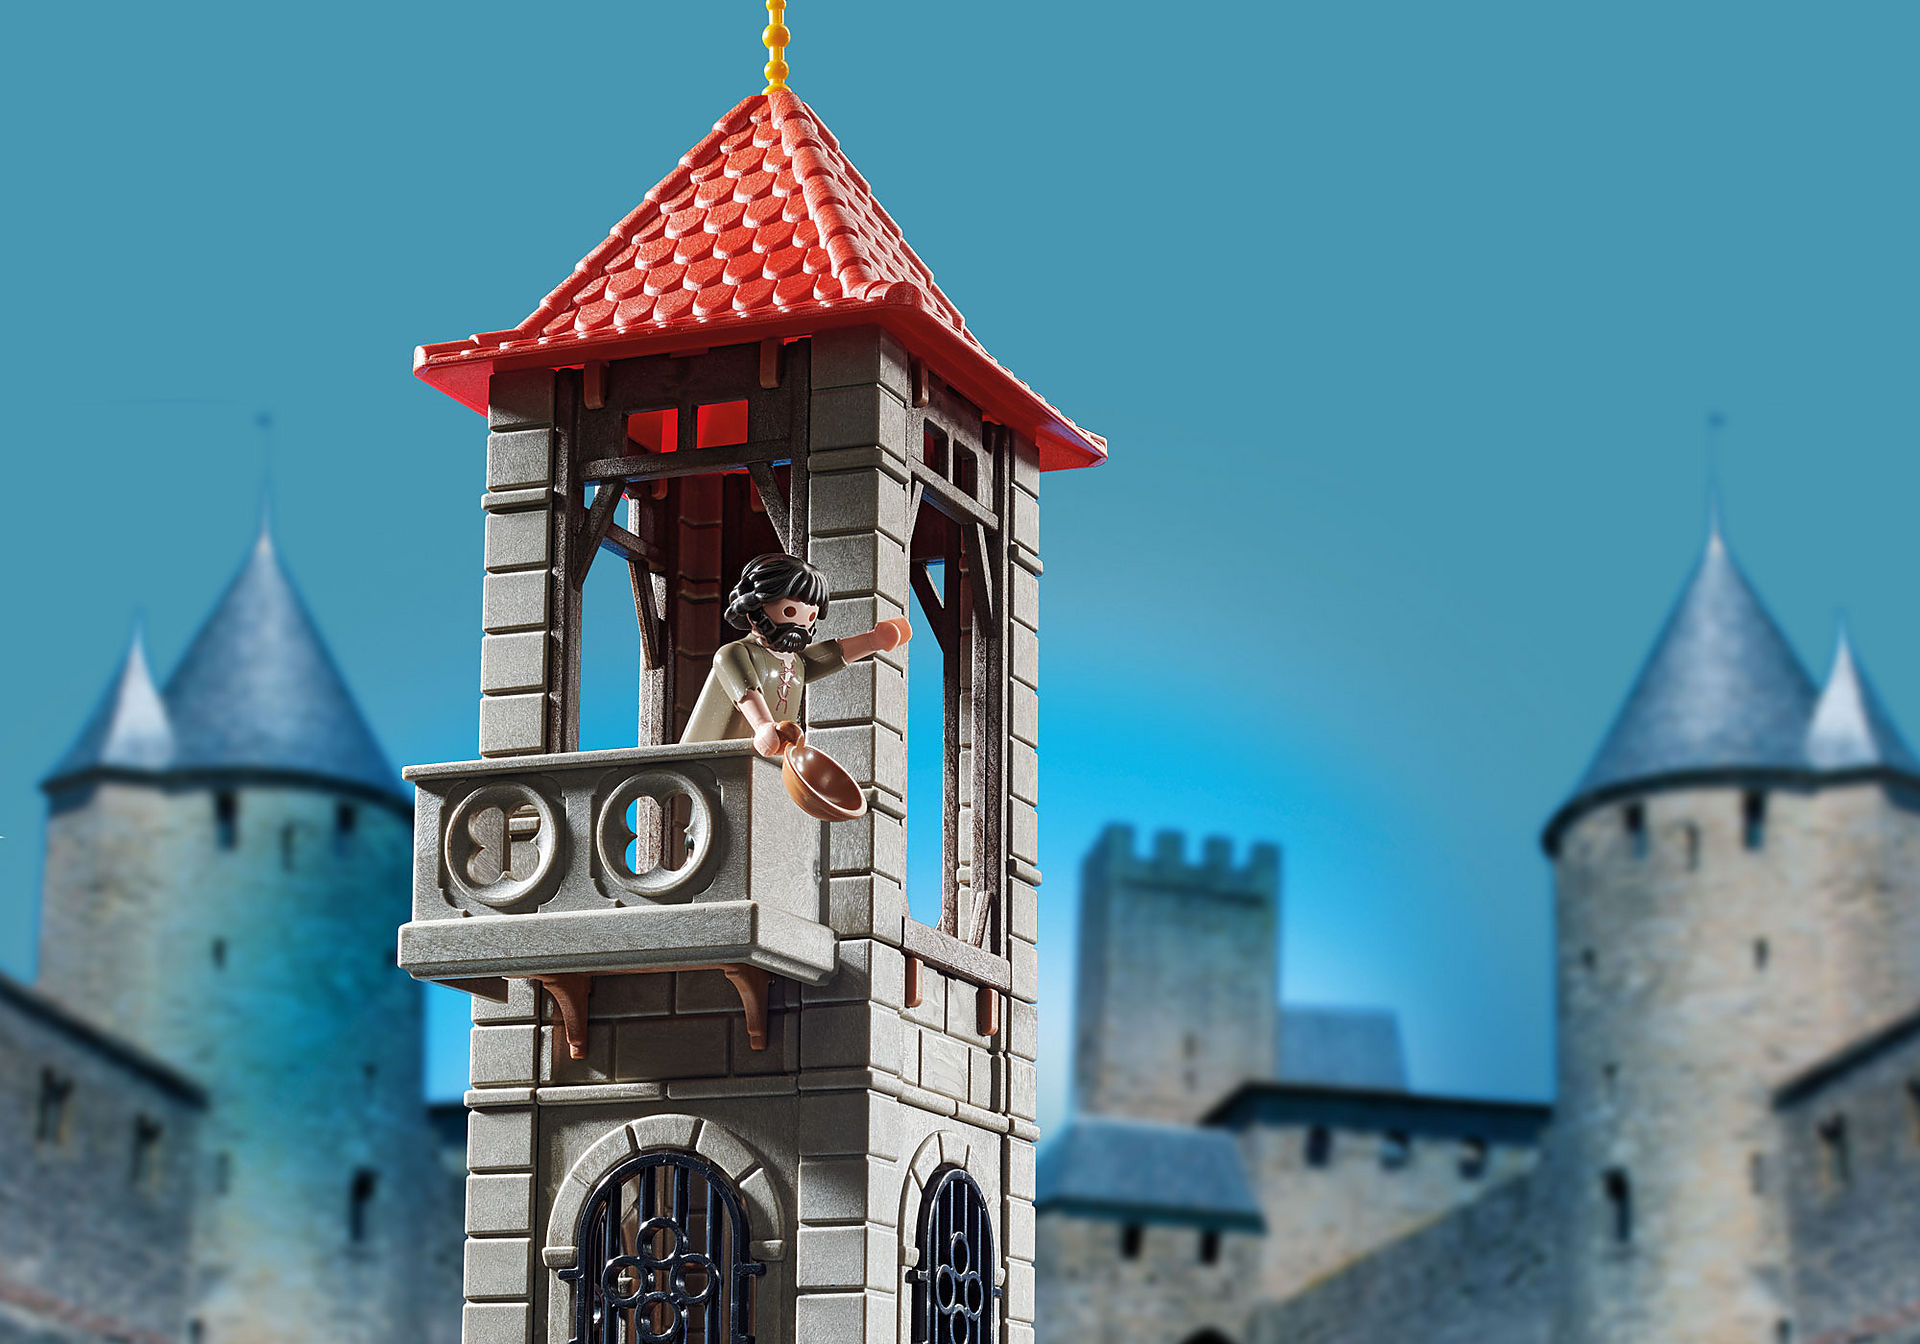 70953 Prigione medievale con torre zoom image6